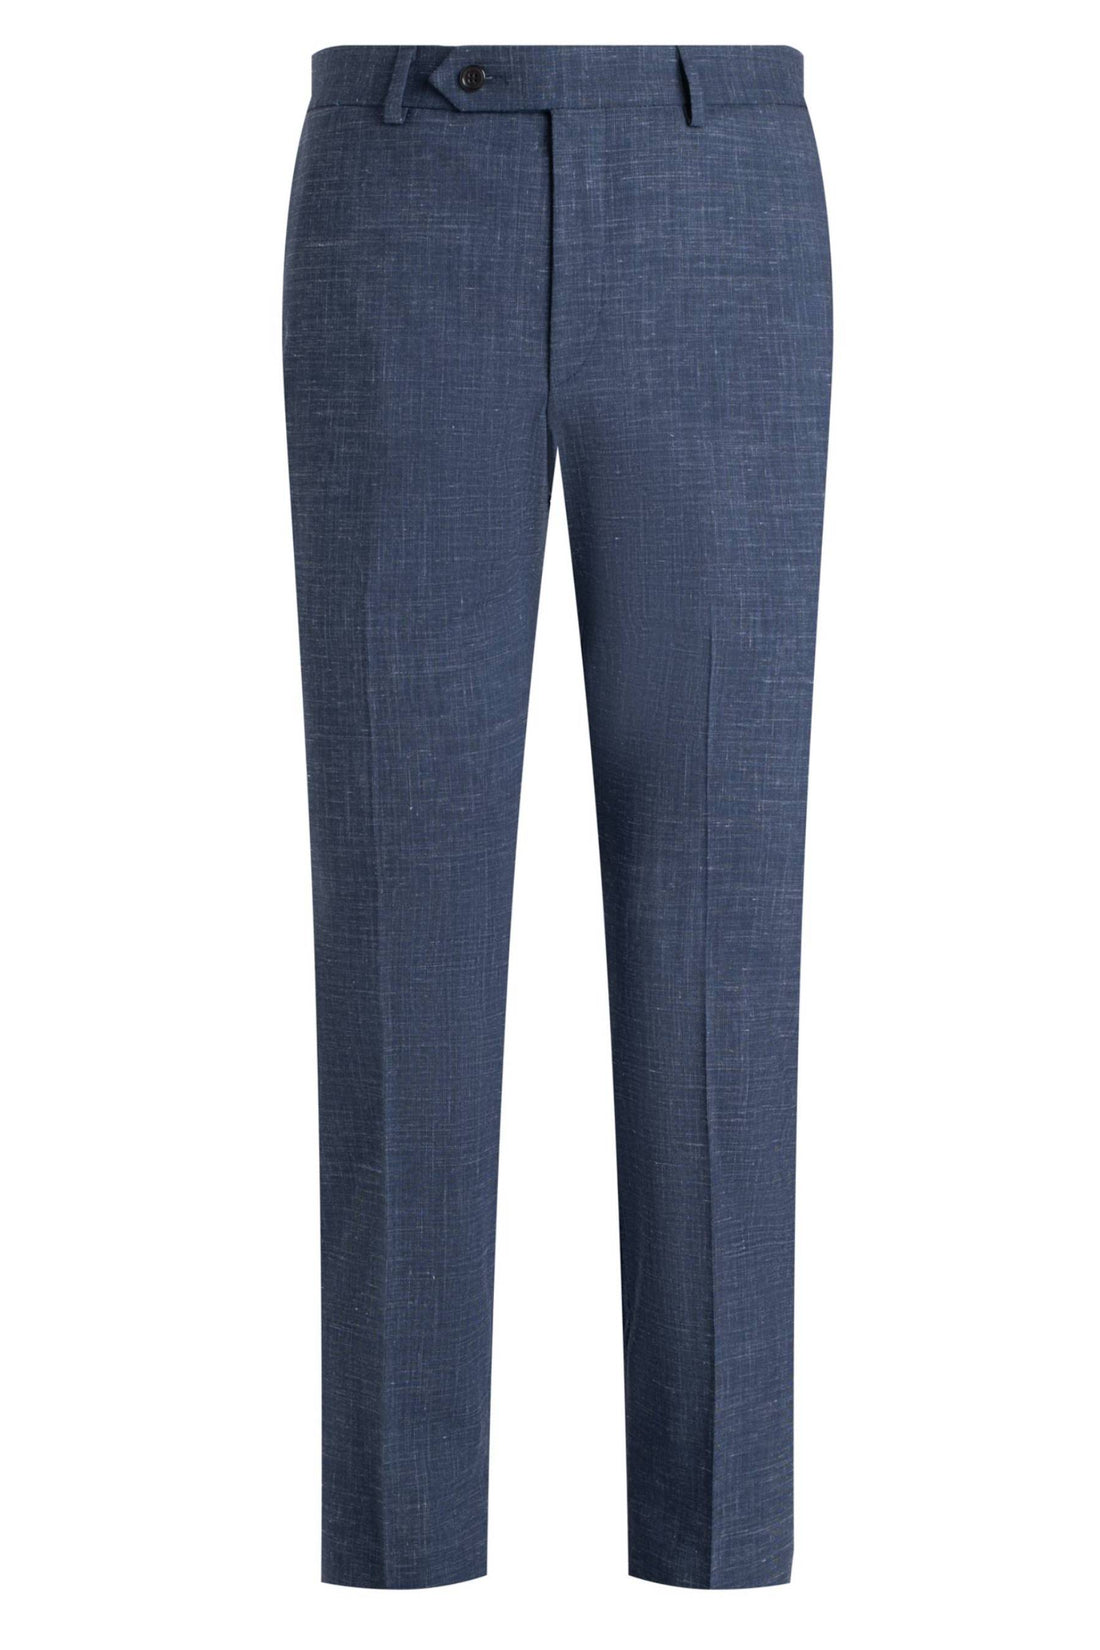 Samuelsohn Blue Wool Linen Stretch Suit Front Pant